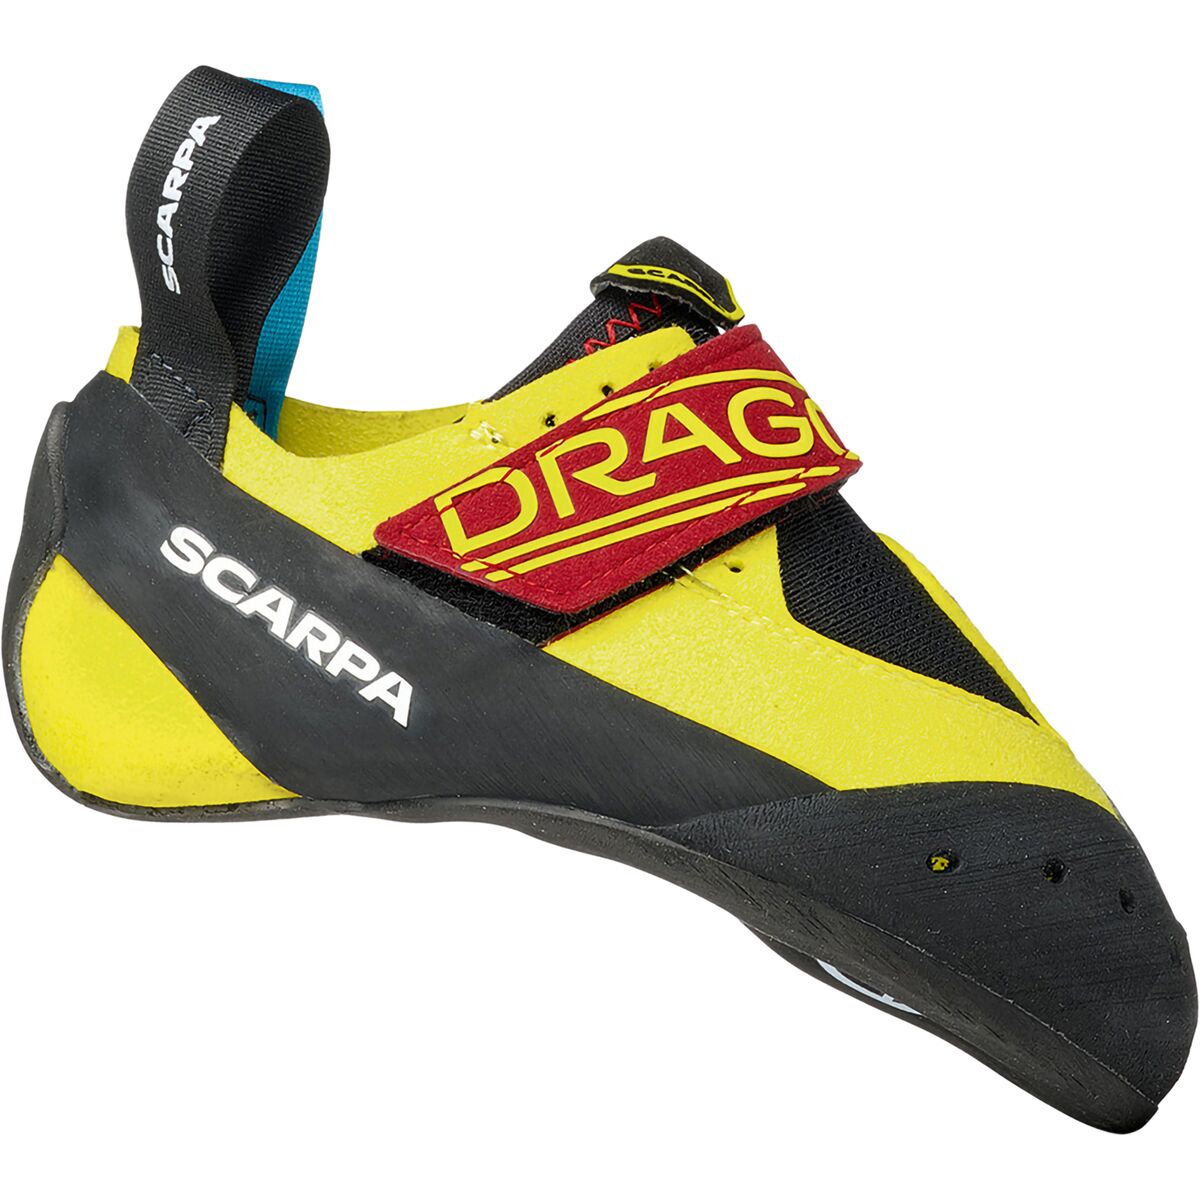 Drago - Scarpa - climbing shoes Boots